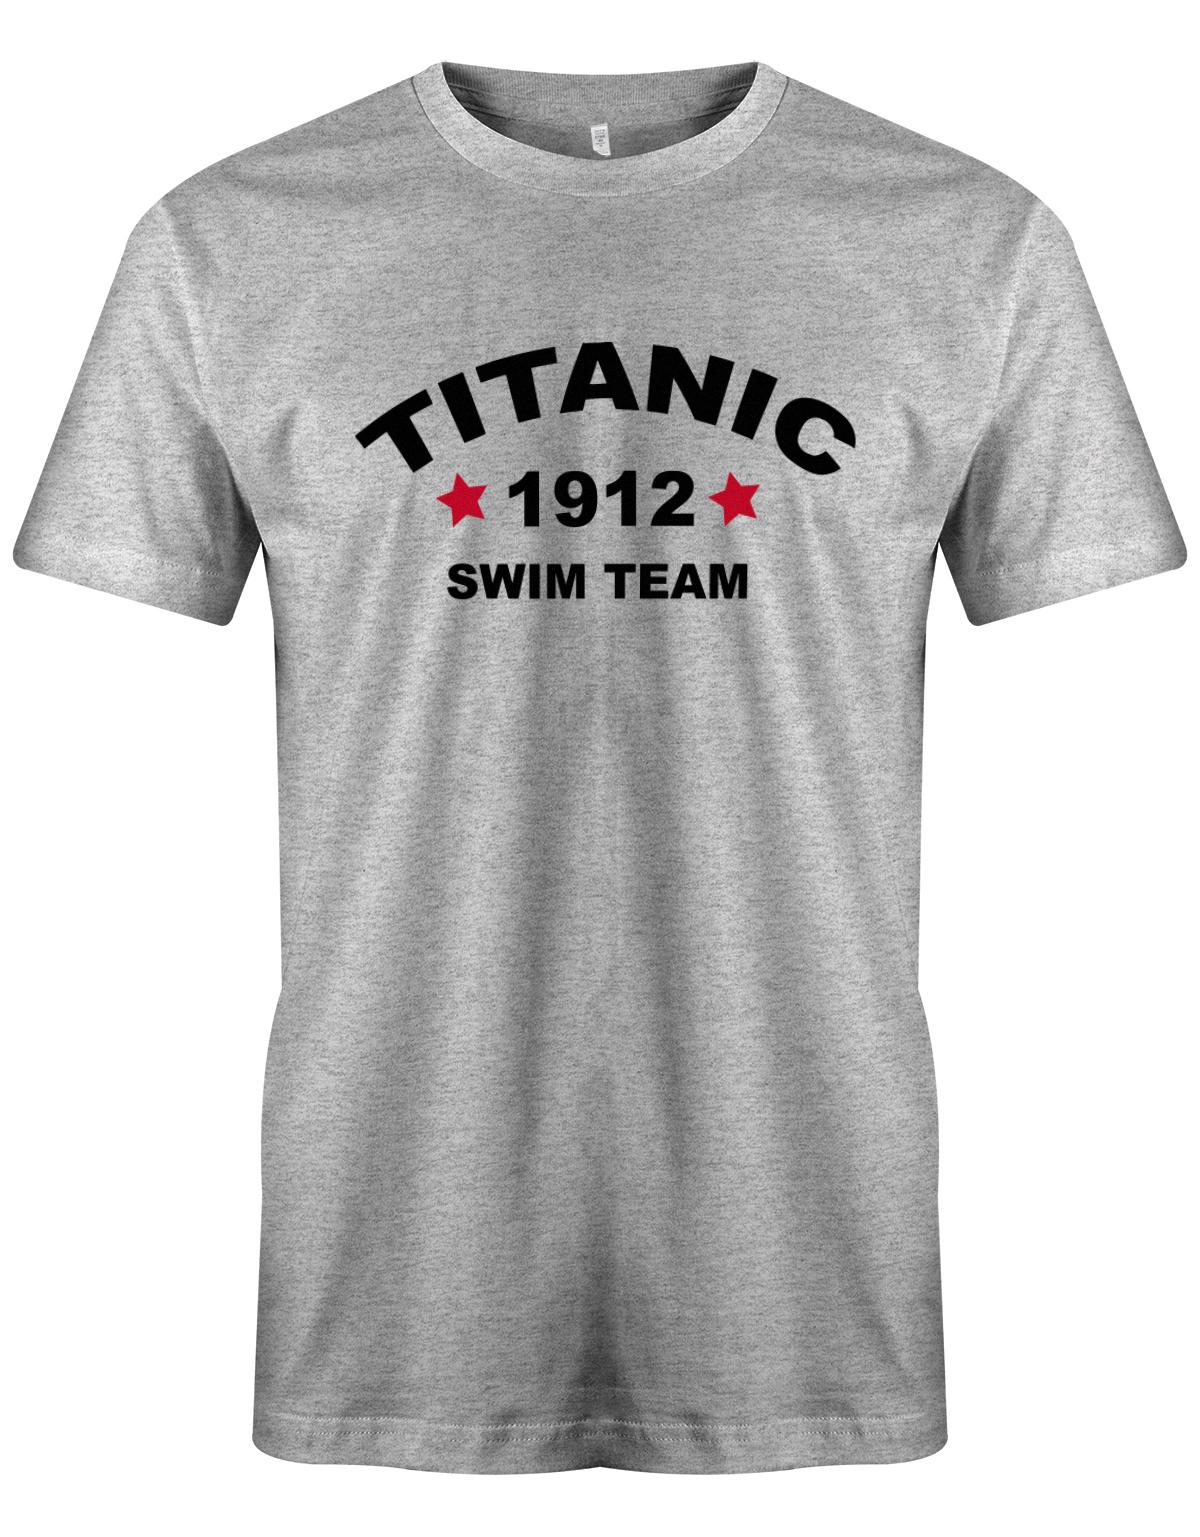 Titanic-1912-Swim-Team-Herren-Shirt-Grau